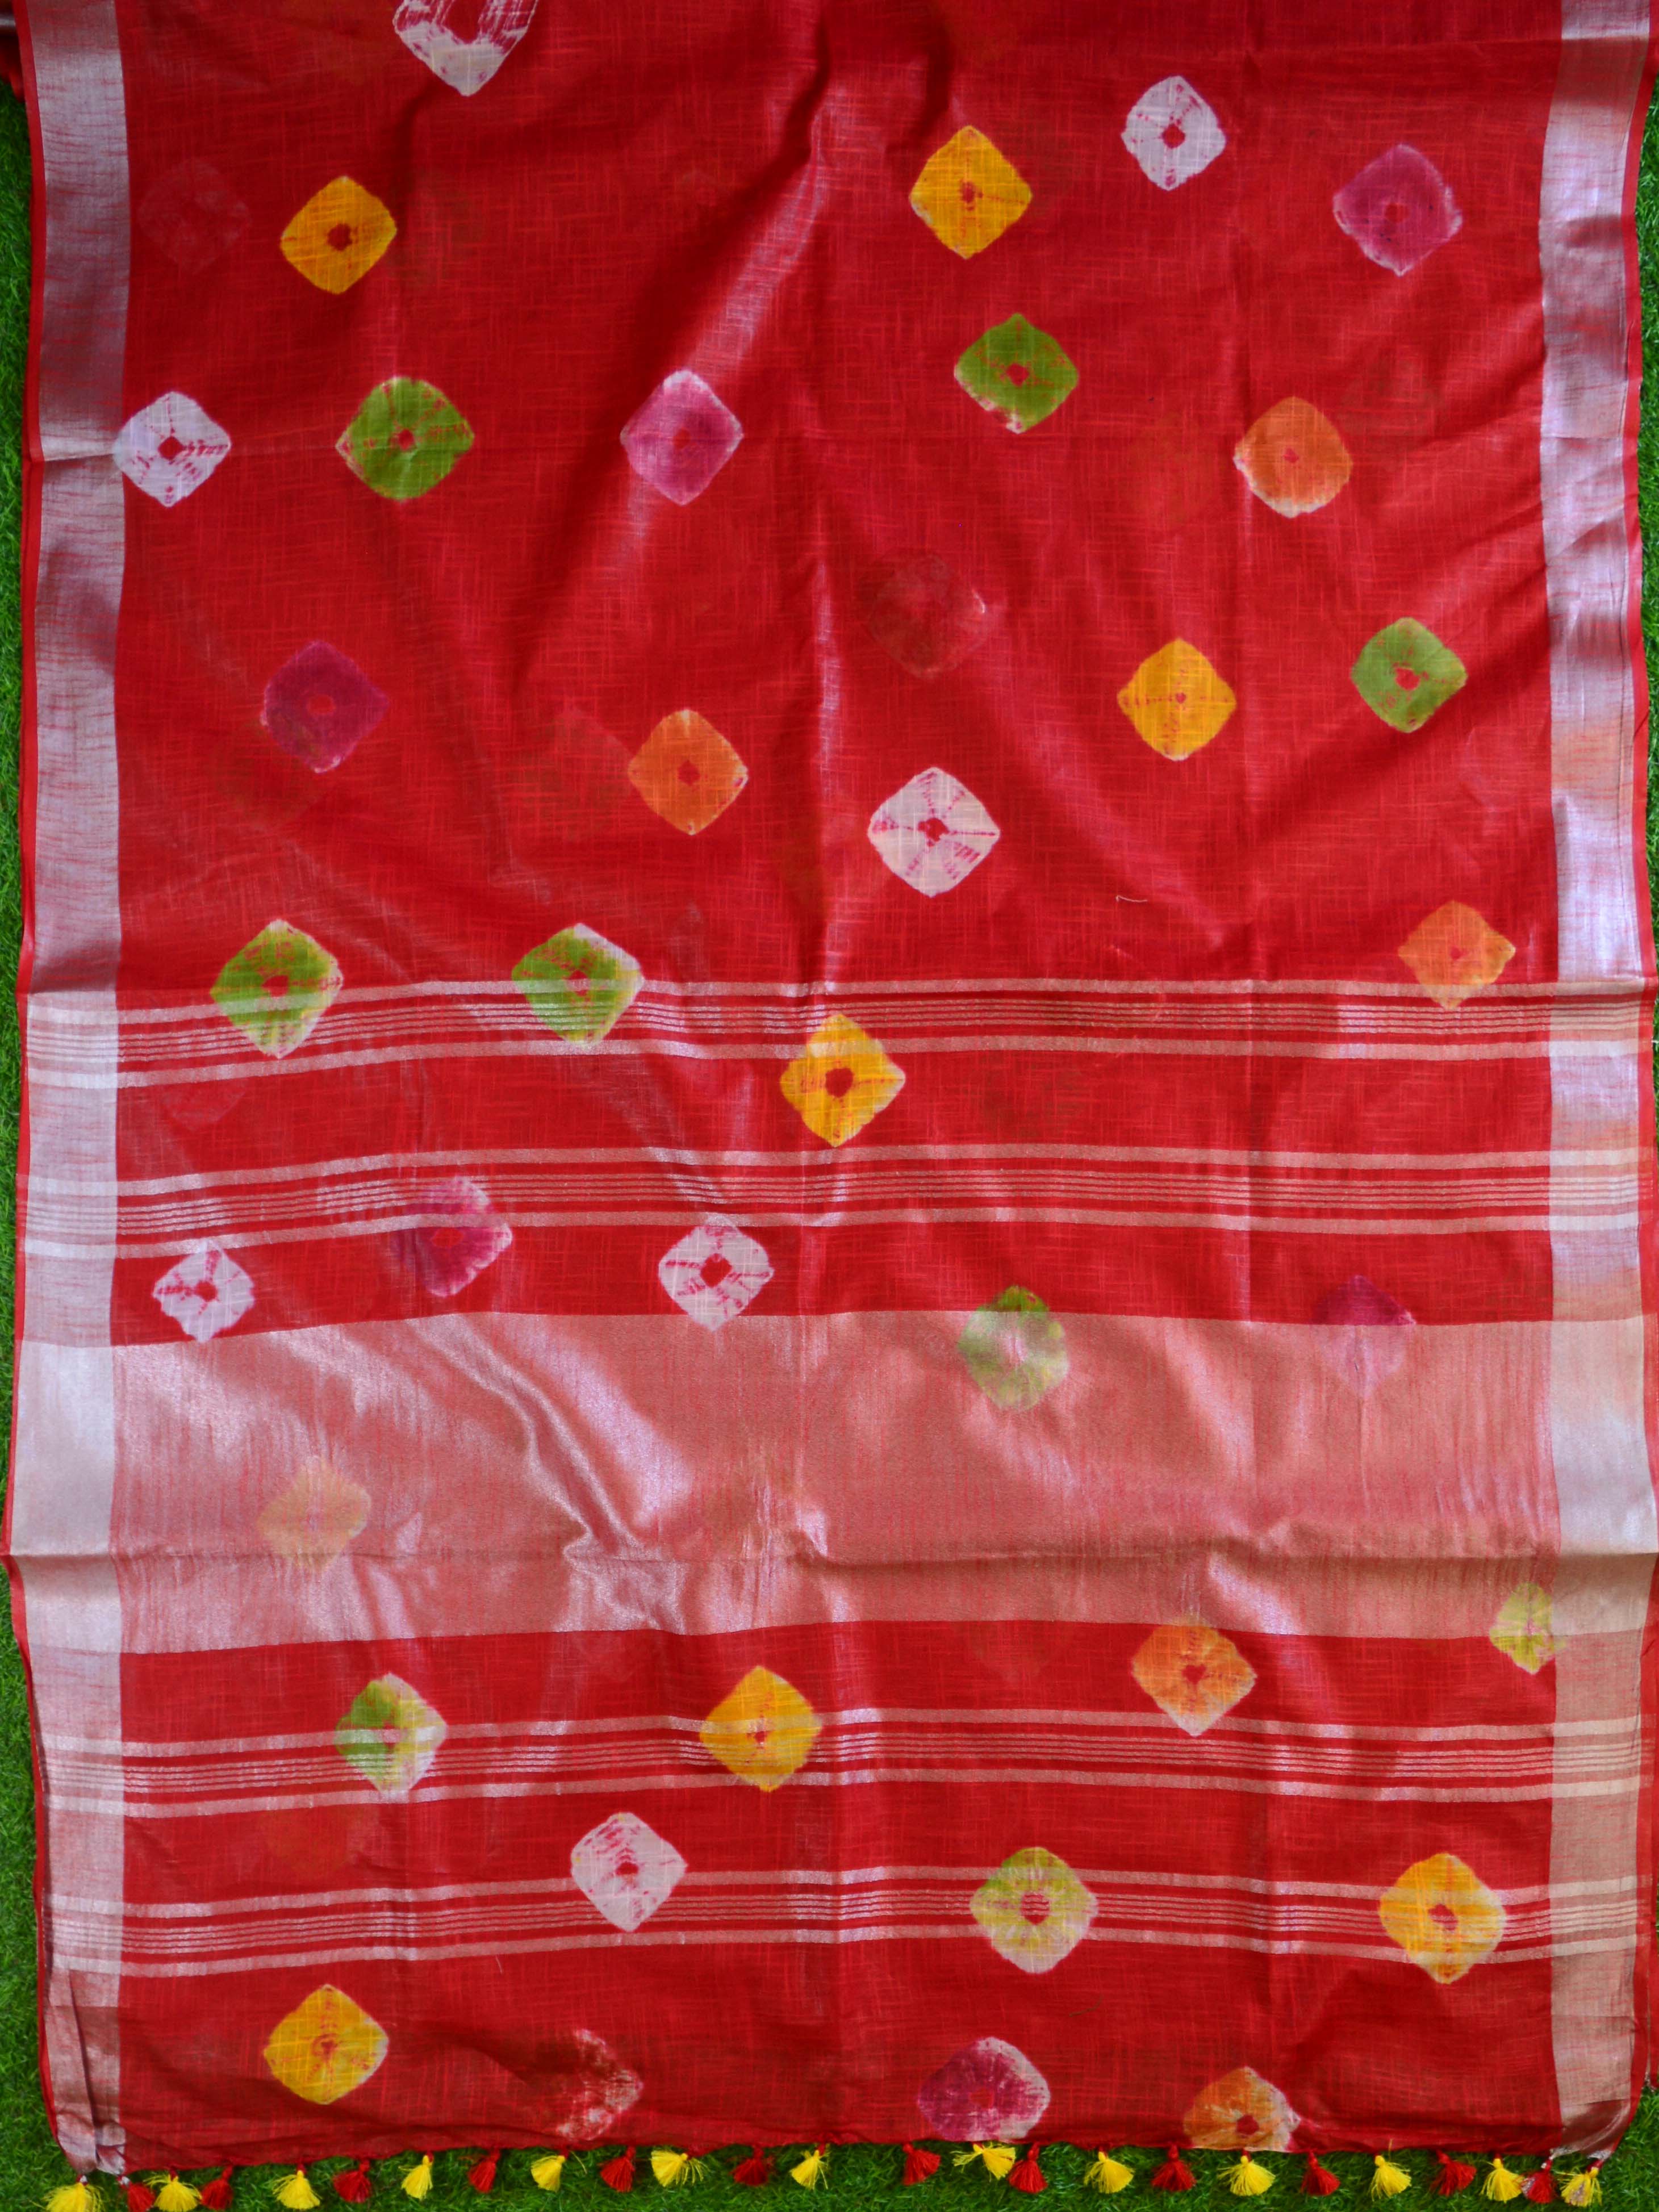 Bhagalpur Handloom Pure Linen Cotton Hand-Dyed Multicolor Bandhej Saree-Red